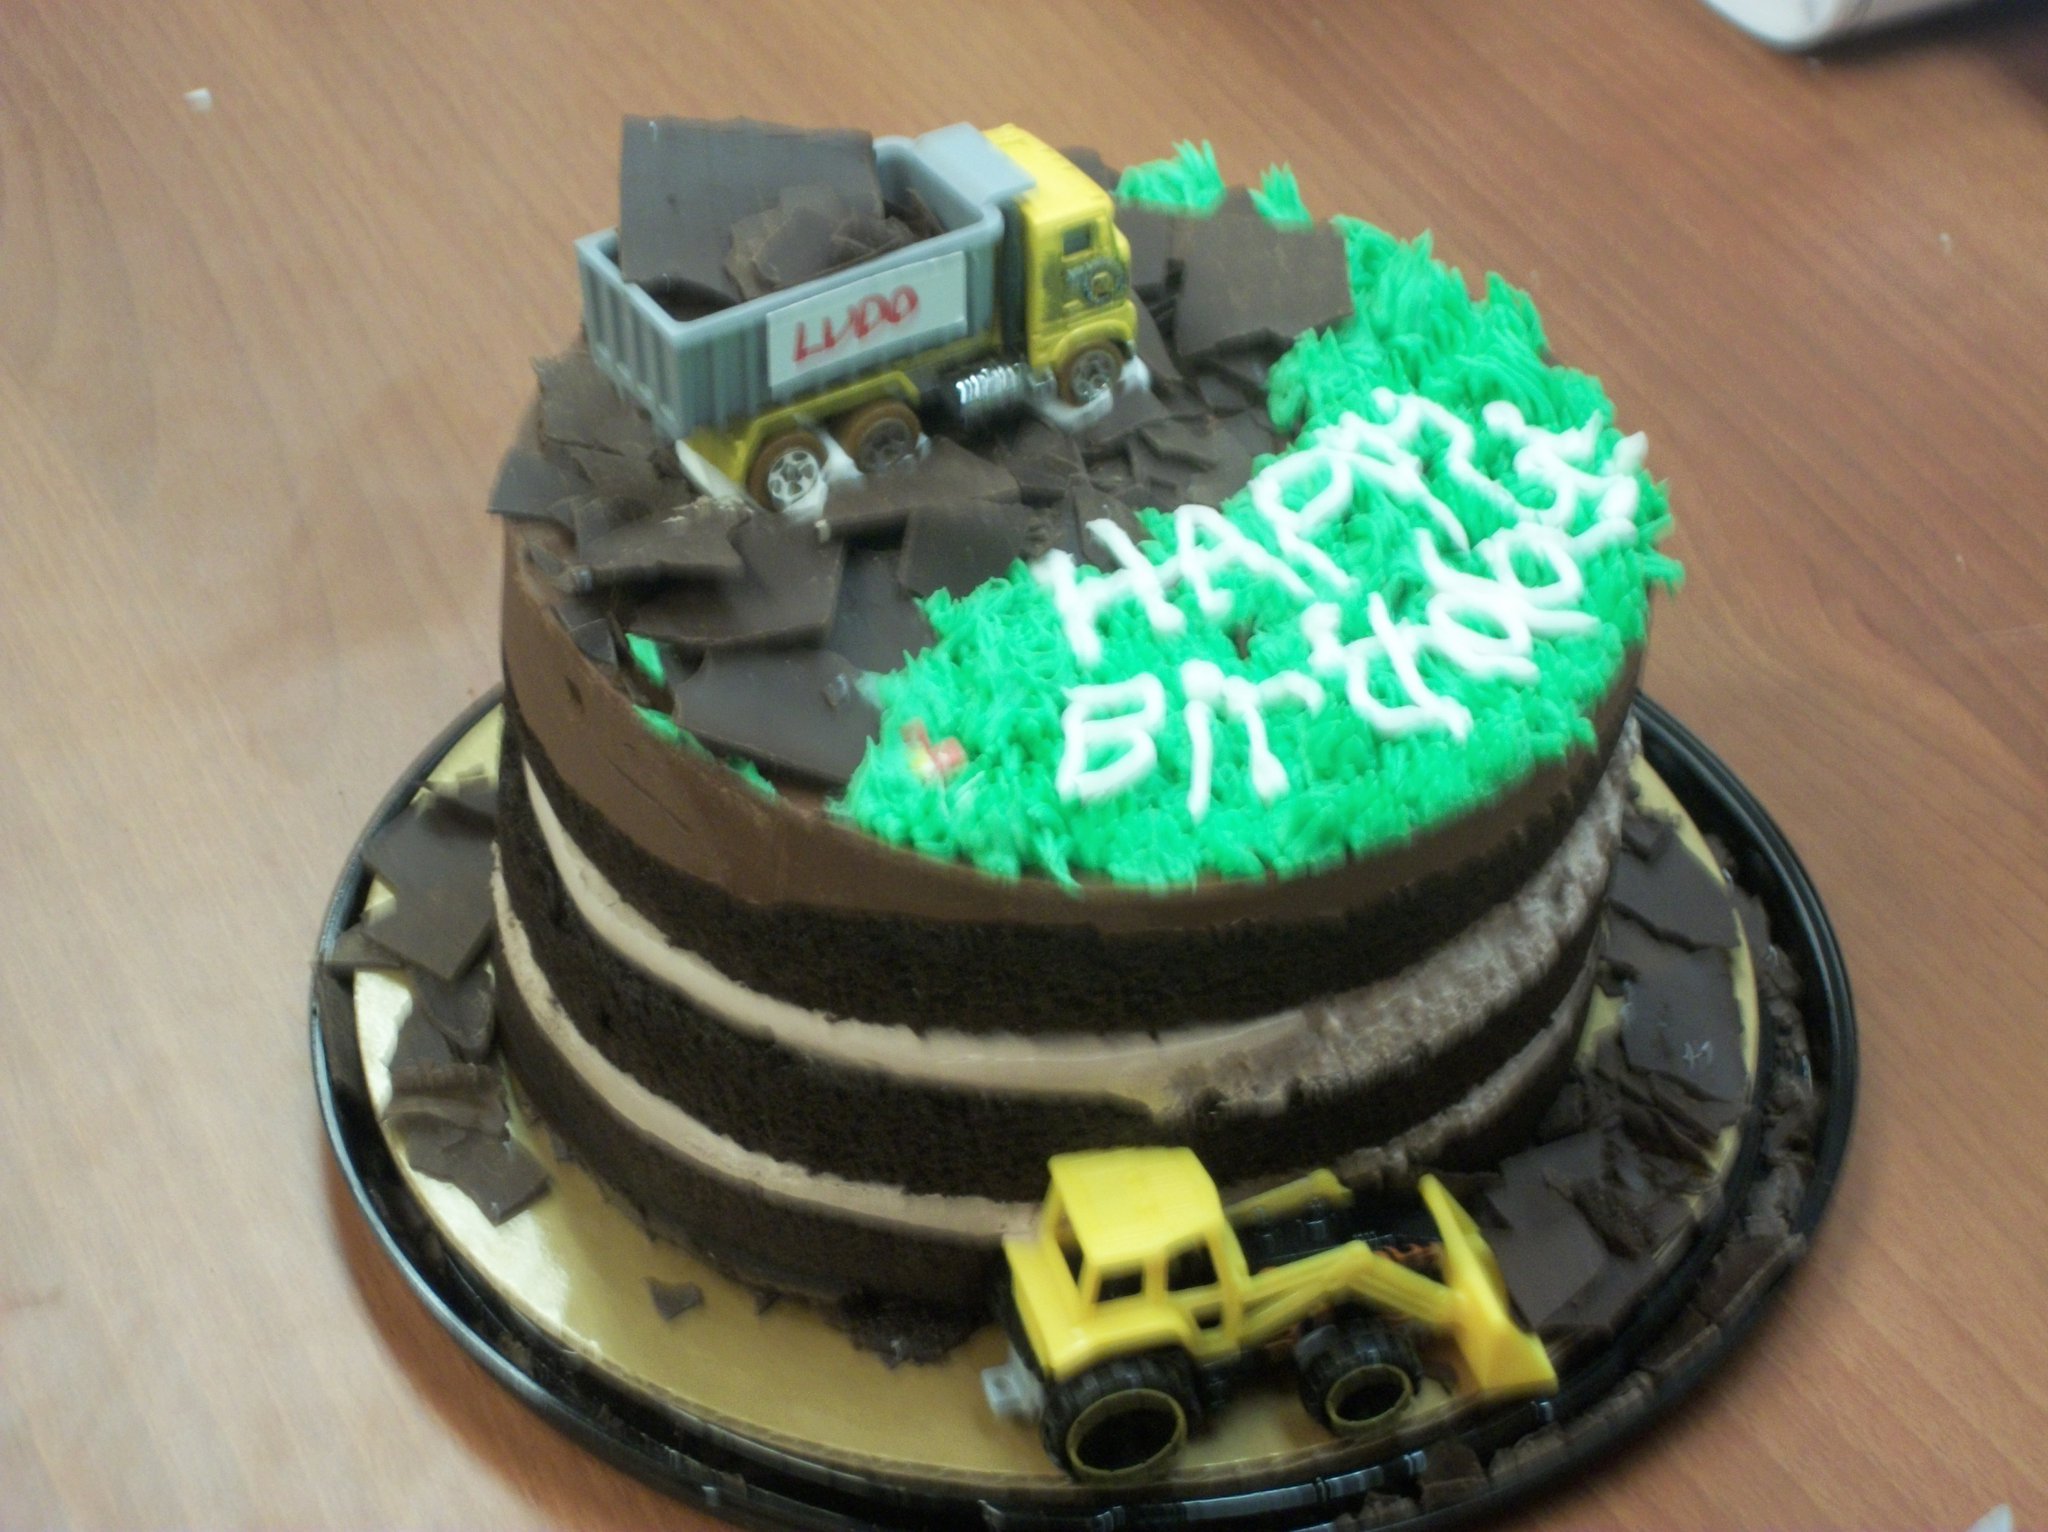 Engineer Theme Birthday Cake - Special Customized Cakes